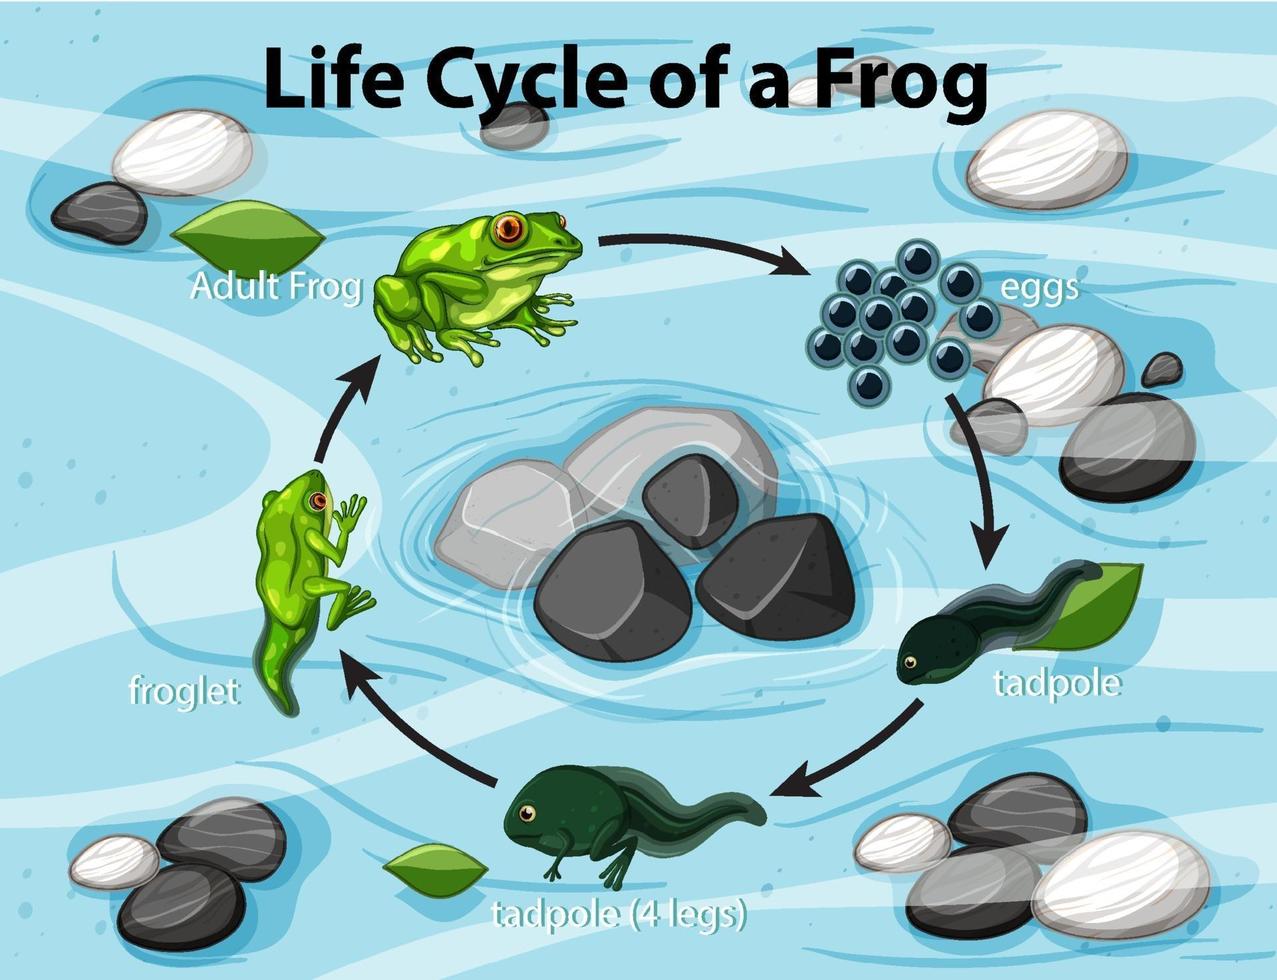 diagrama mostrando o ciclo de vida do sapo vetor